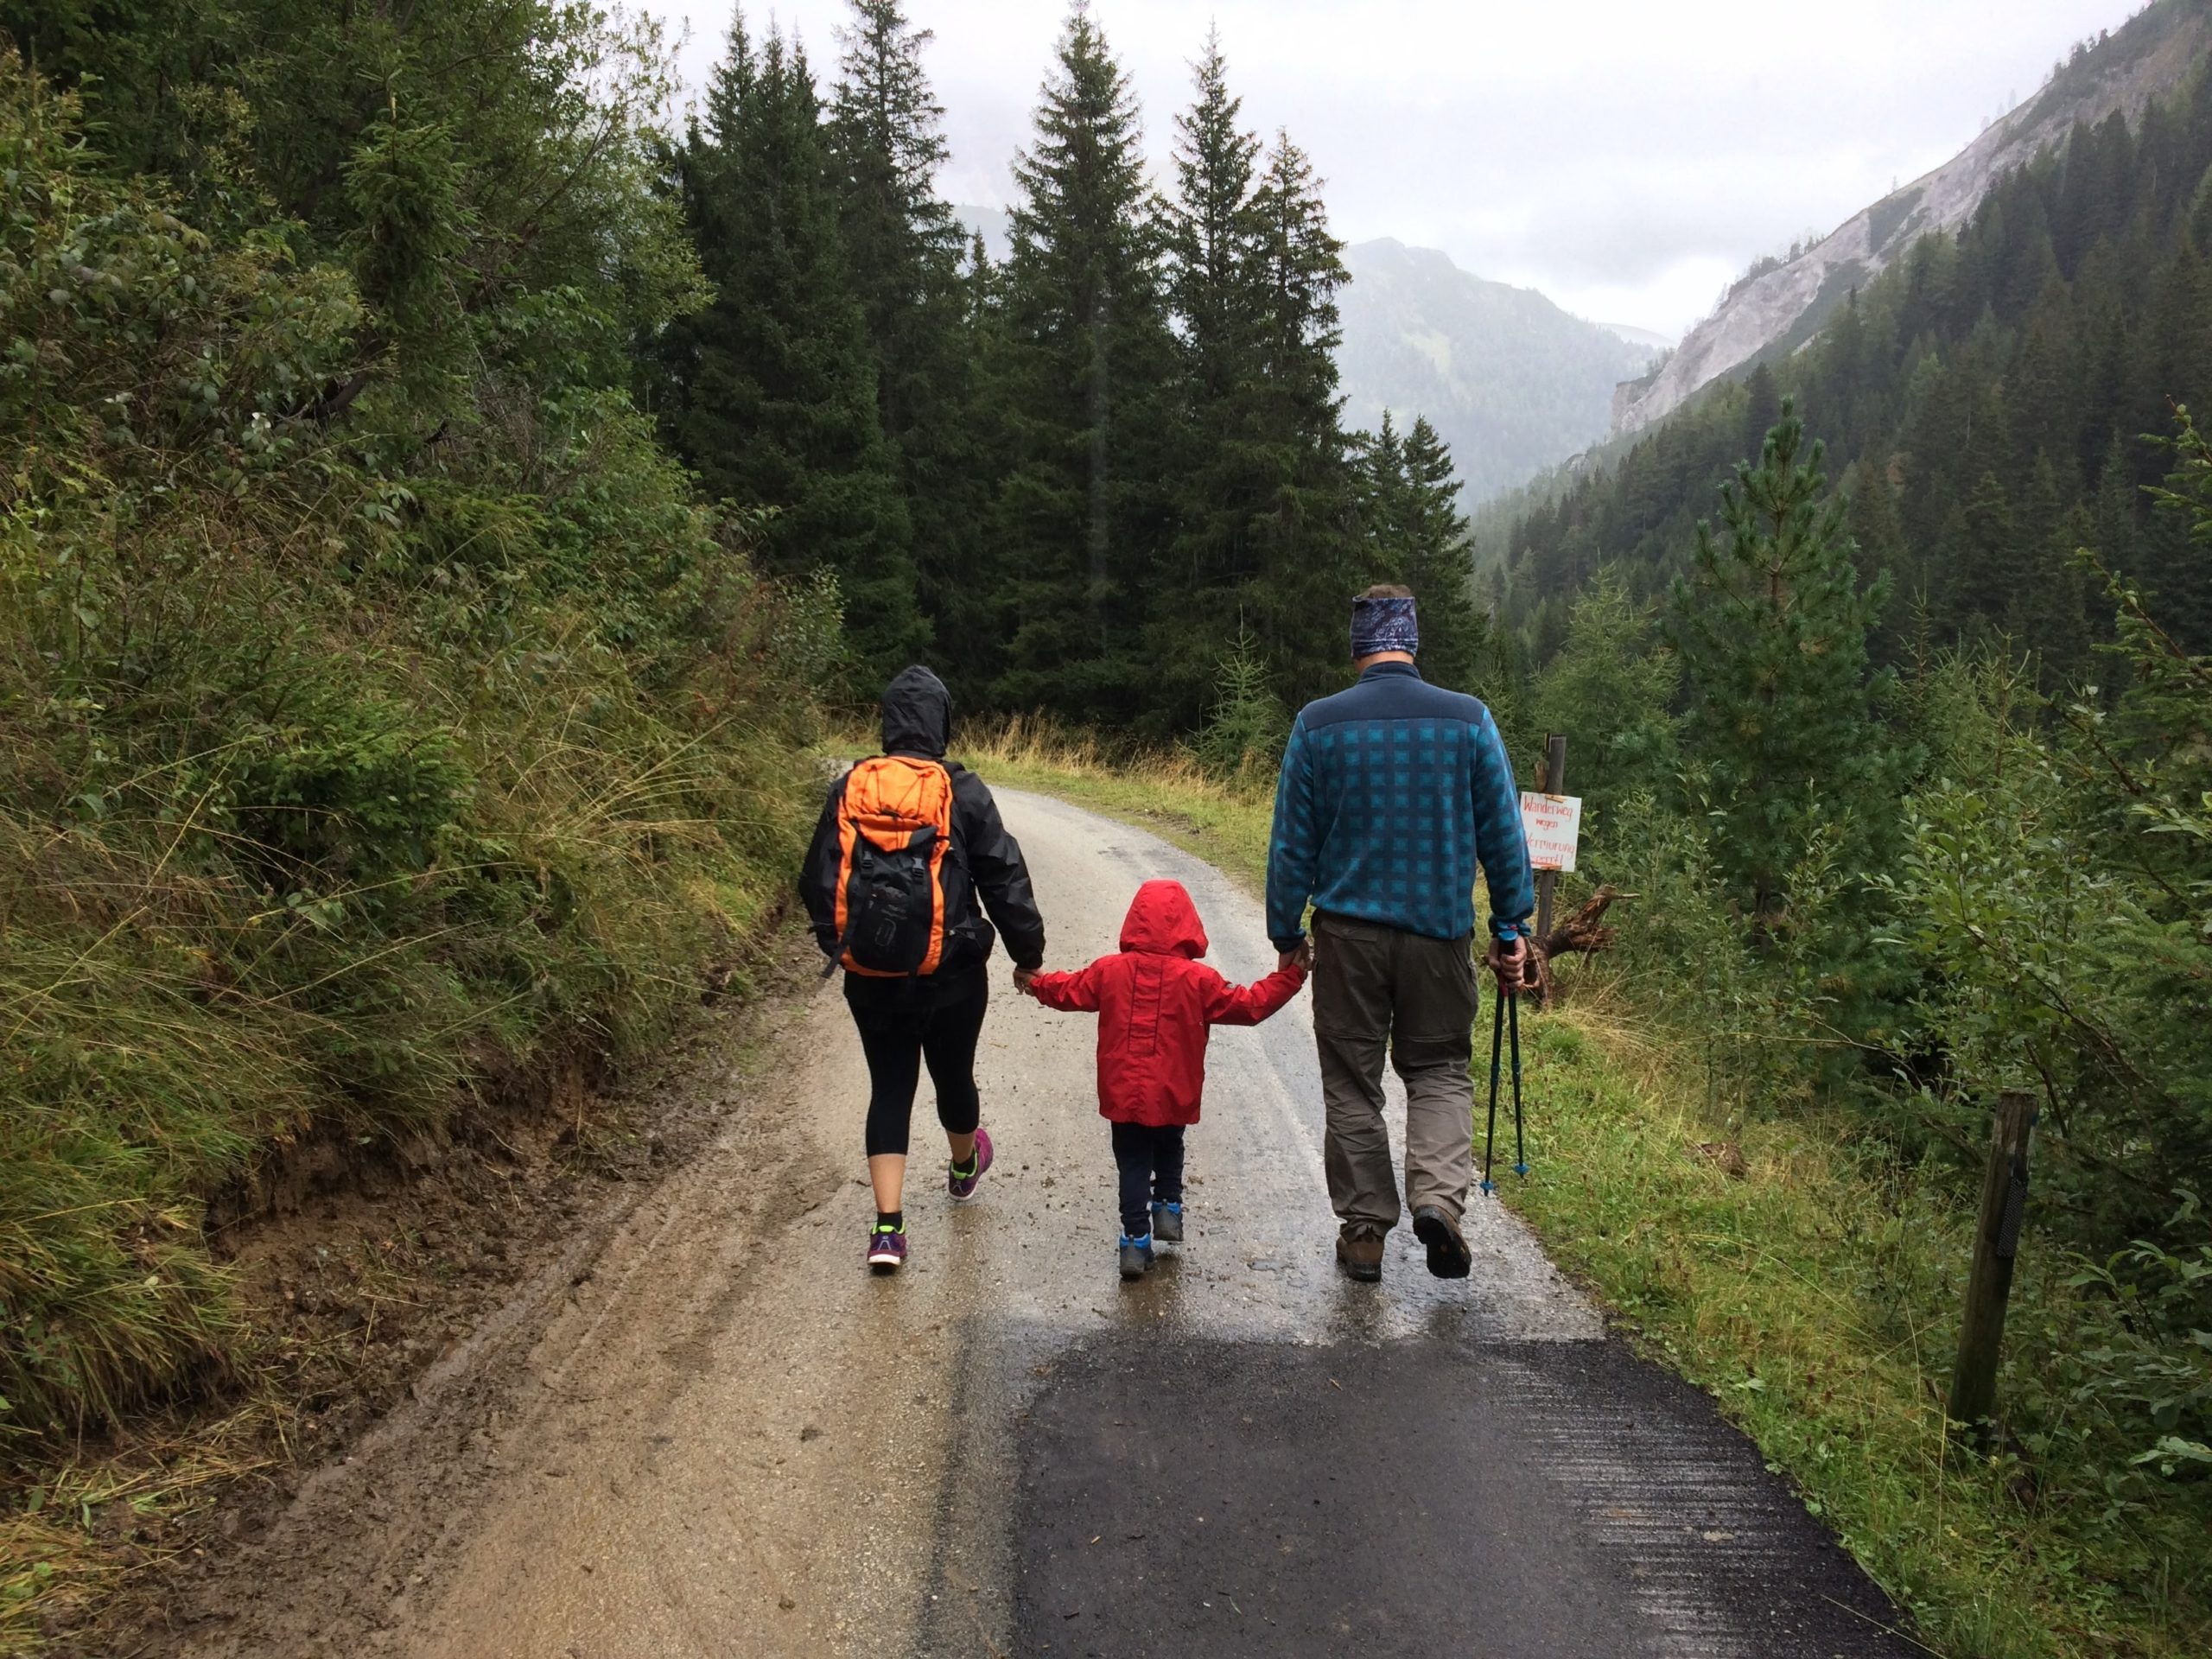 Dua orang tua berjalan di tengah hujan dan dengan anak di antara mereka. Anak mengenakan jas hujan merah cerah dan semua orang berpegangan tangan. Berjalan di sepanjang jalan pegunungan